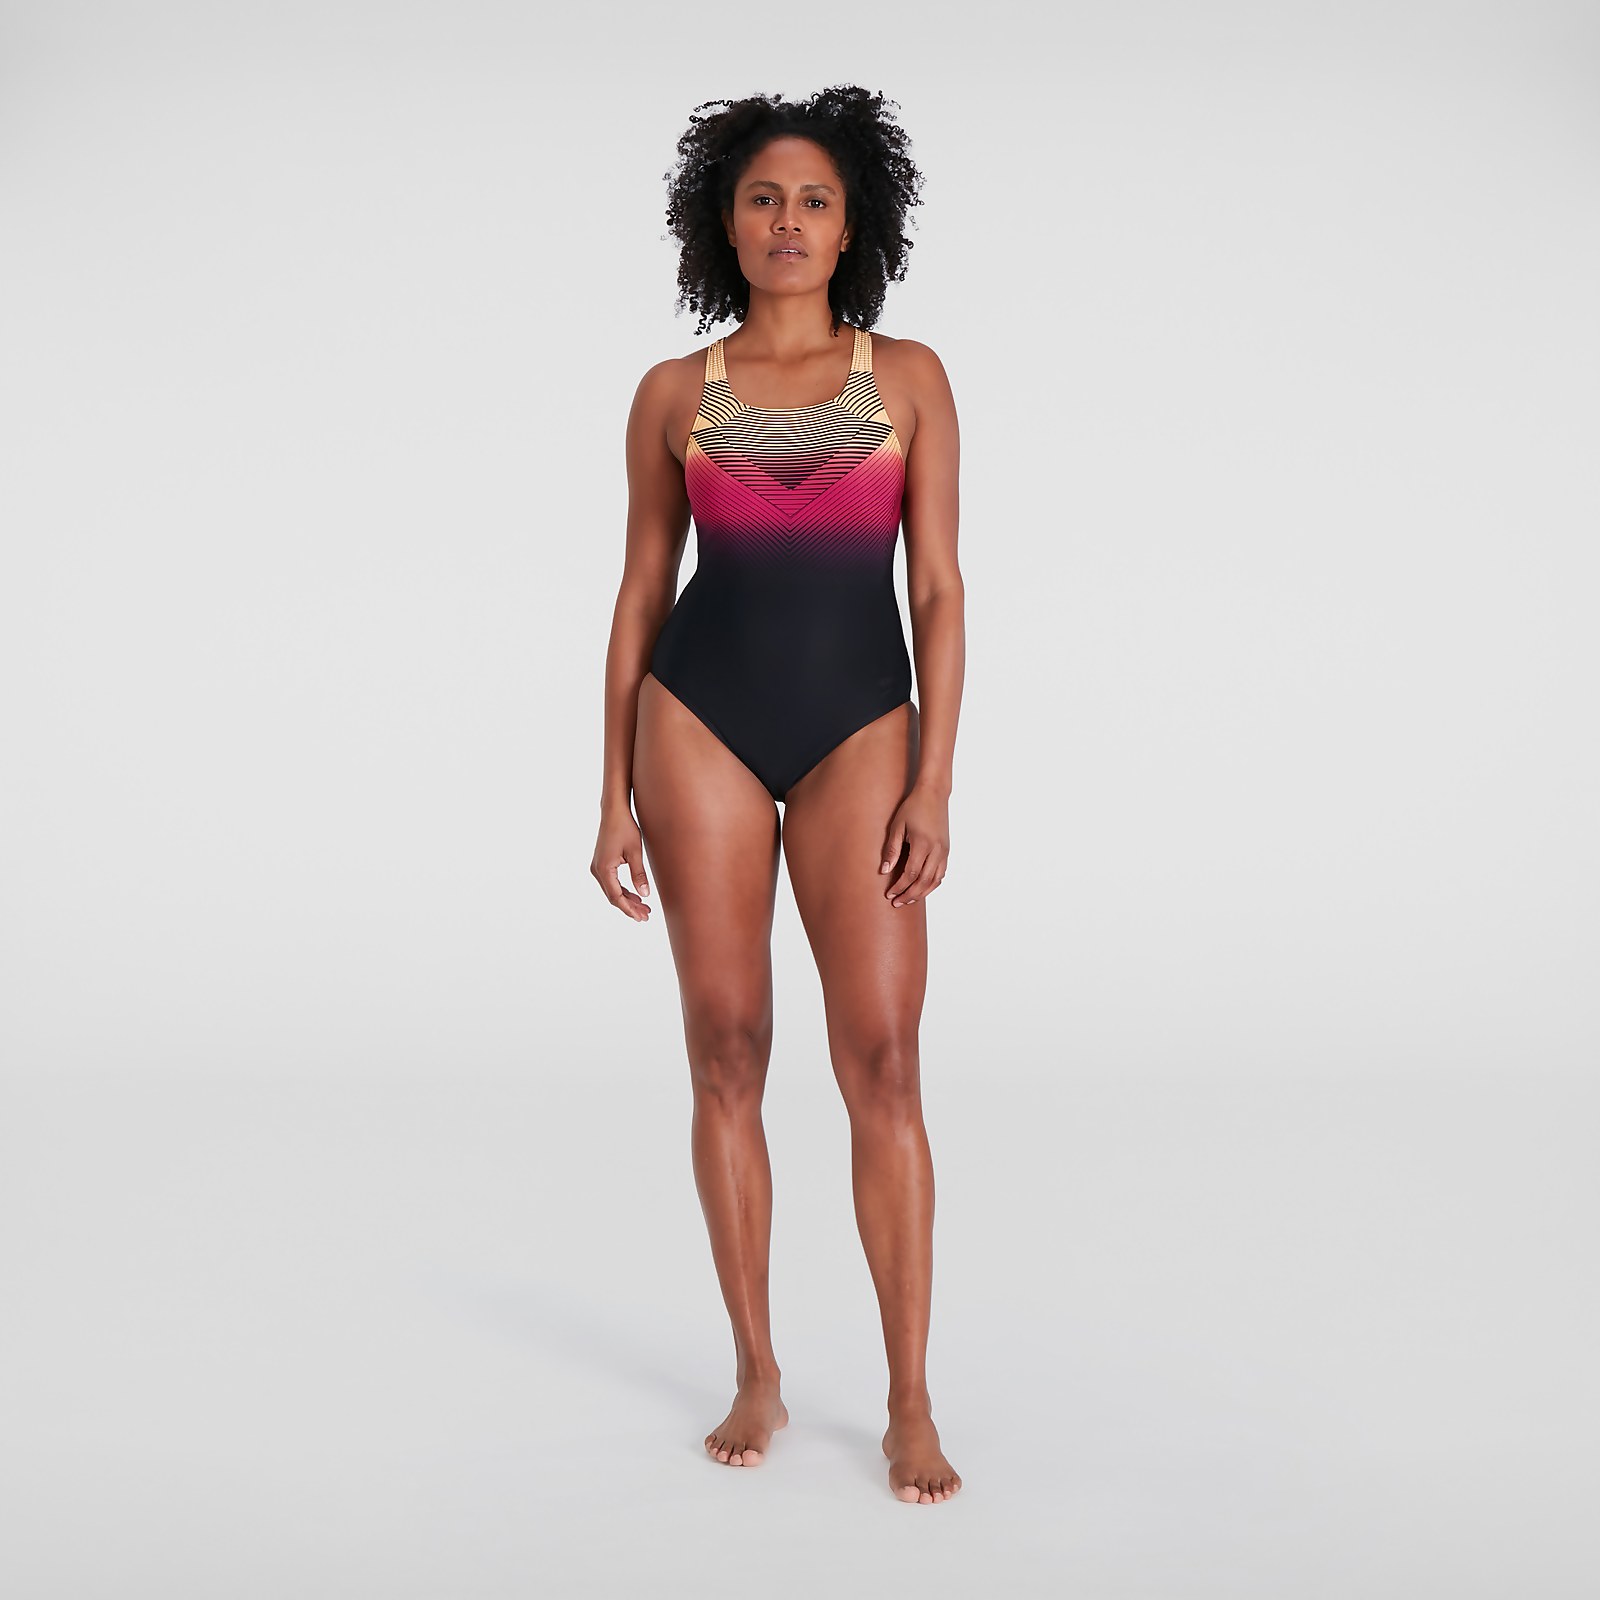 Women's Digital Placement Medalist Swimsuit Black/Red